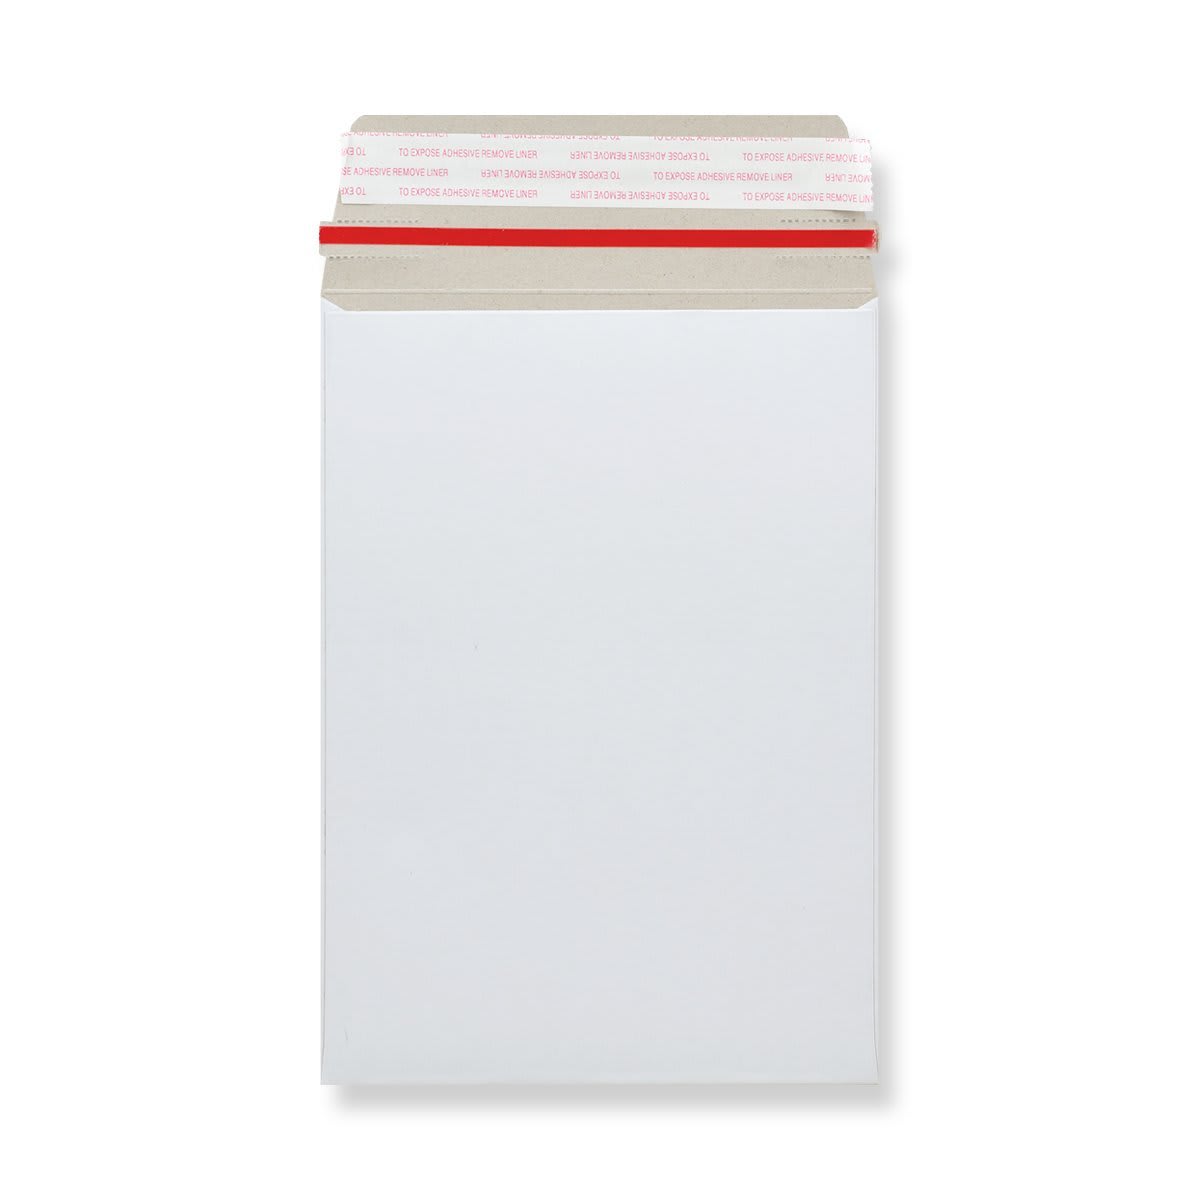 352x249mm White All Board Envelopes